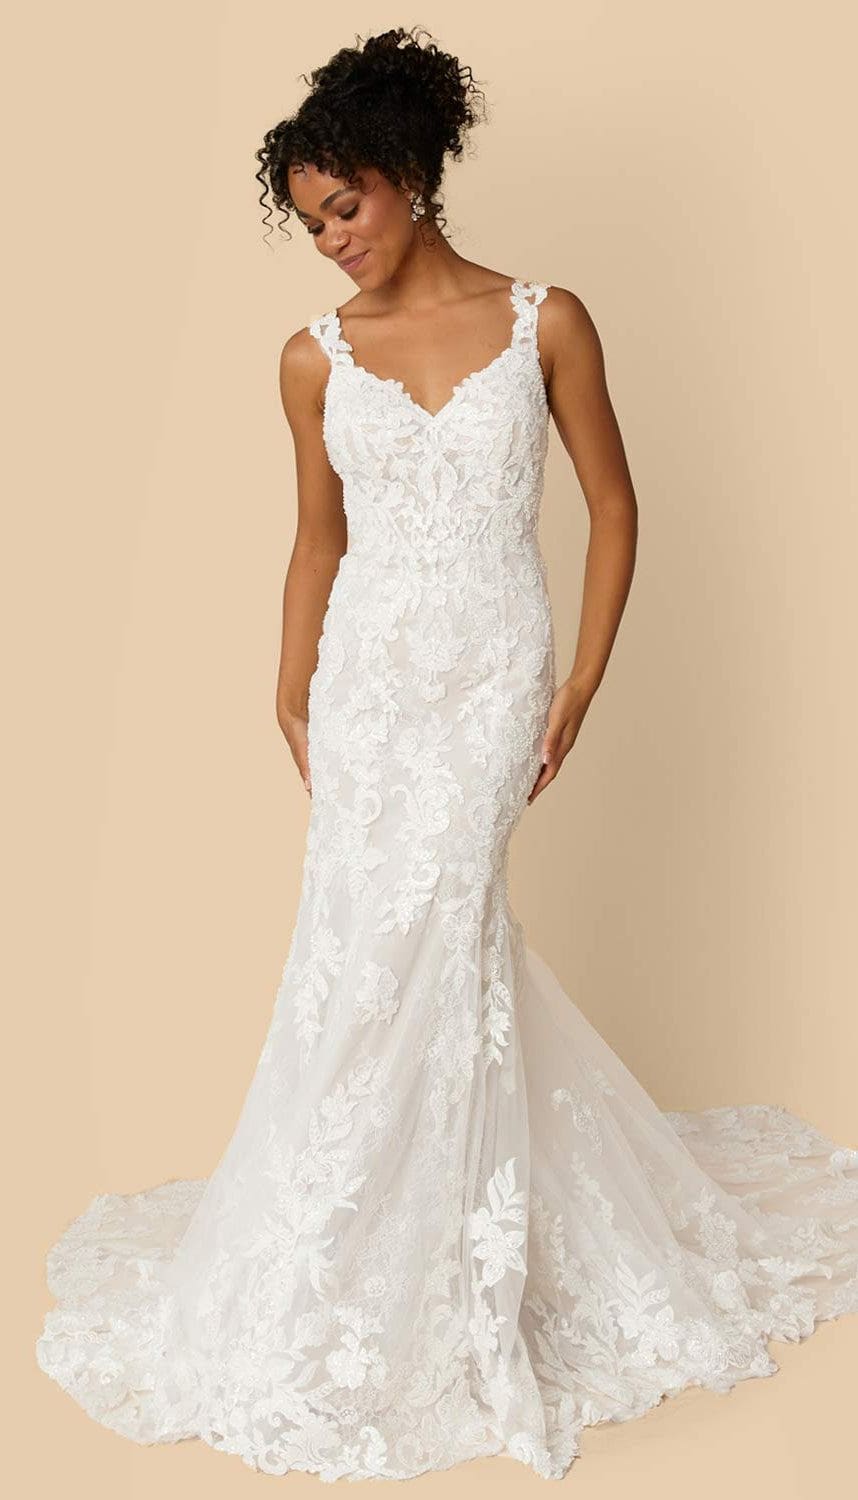 2020 White Satin African Mermaid Wedding Dress Plus Size Black Bridal Gown  For Women From Hellobuyerh, $136.69 | DHgate.Com